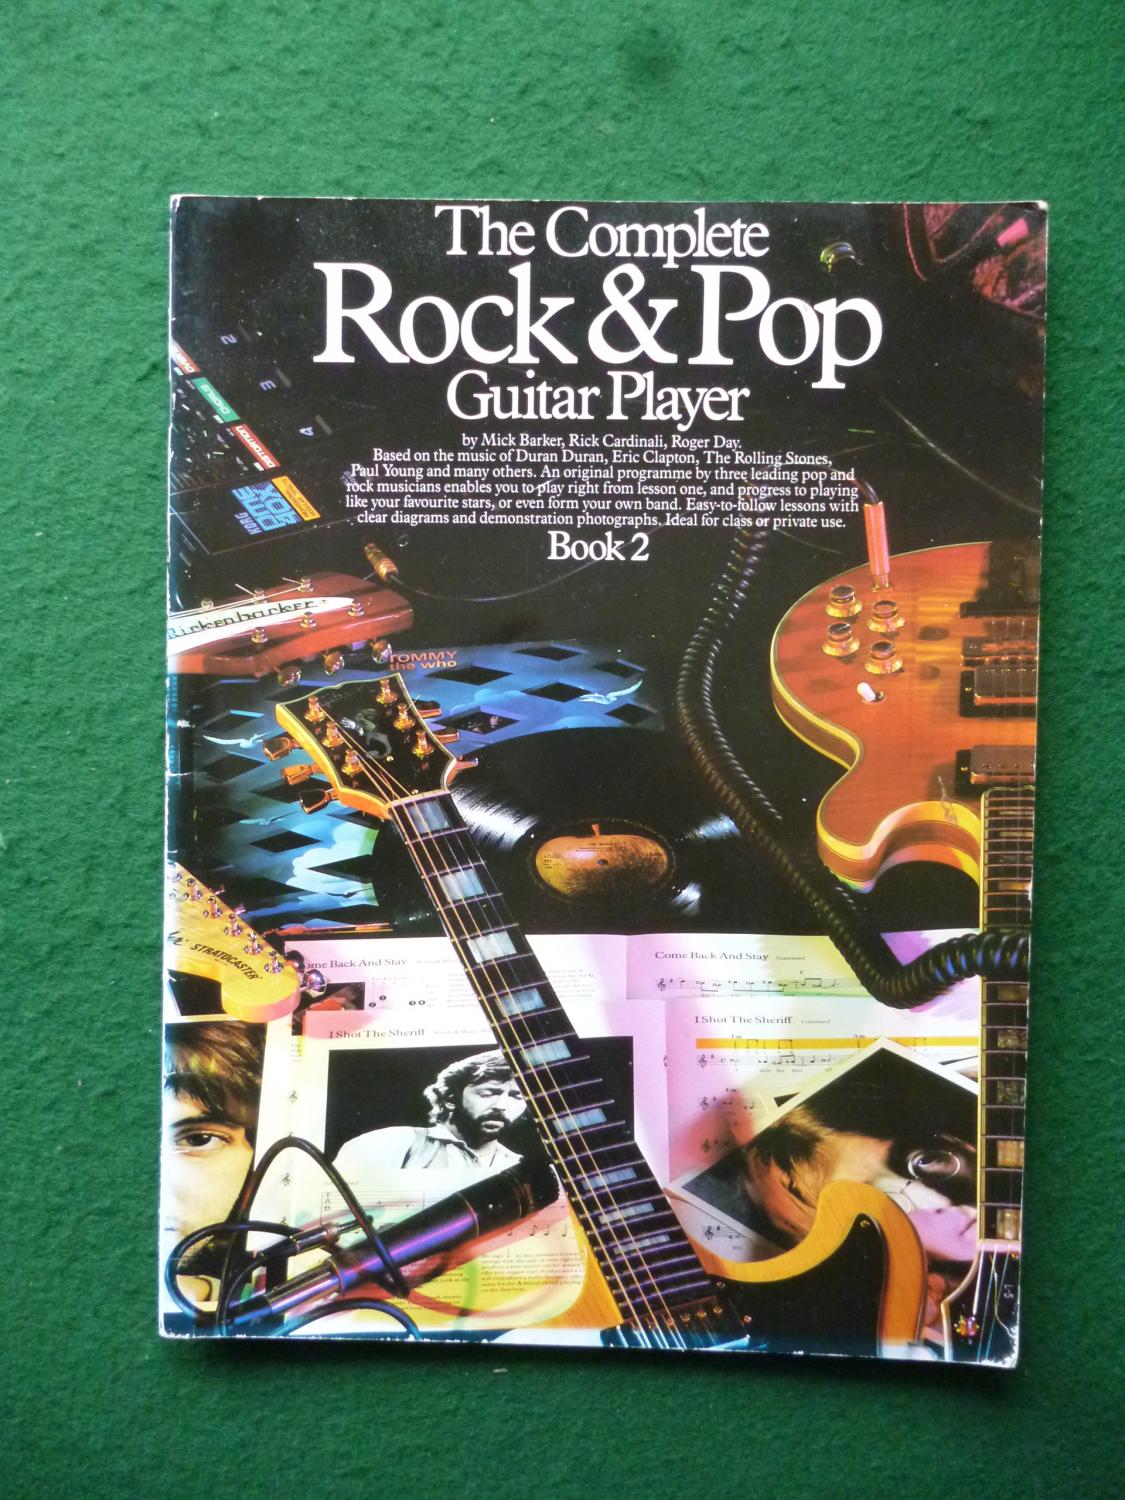 The Complete Rock & Pop Guitar Player Book 2 - Mick Barker, Rick Cardinali, Roger Day